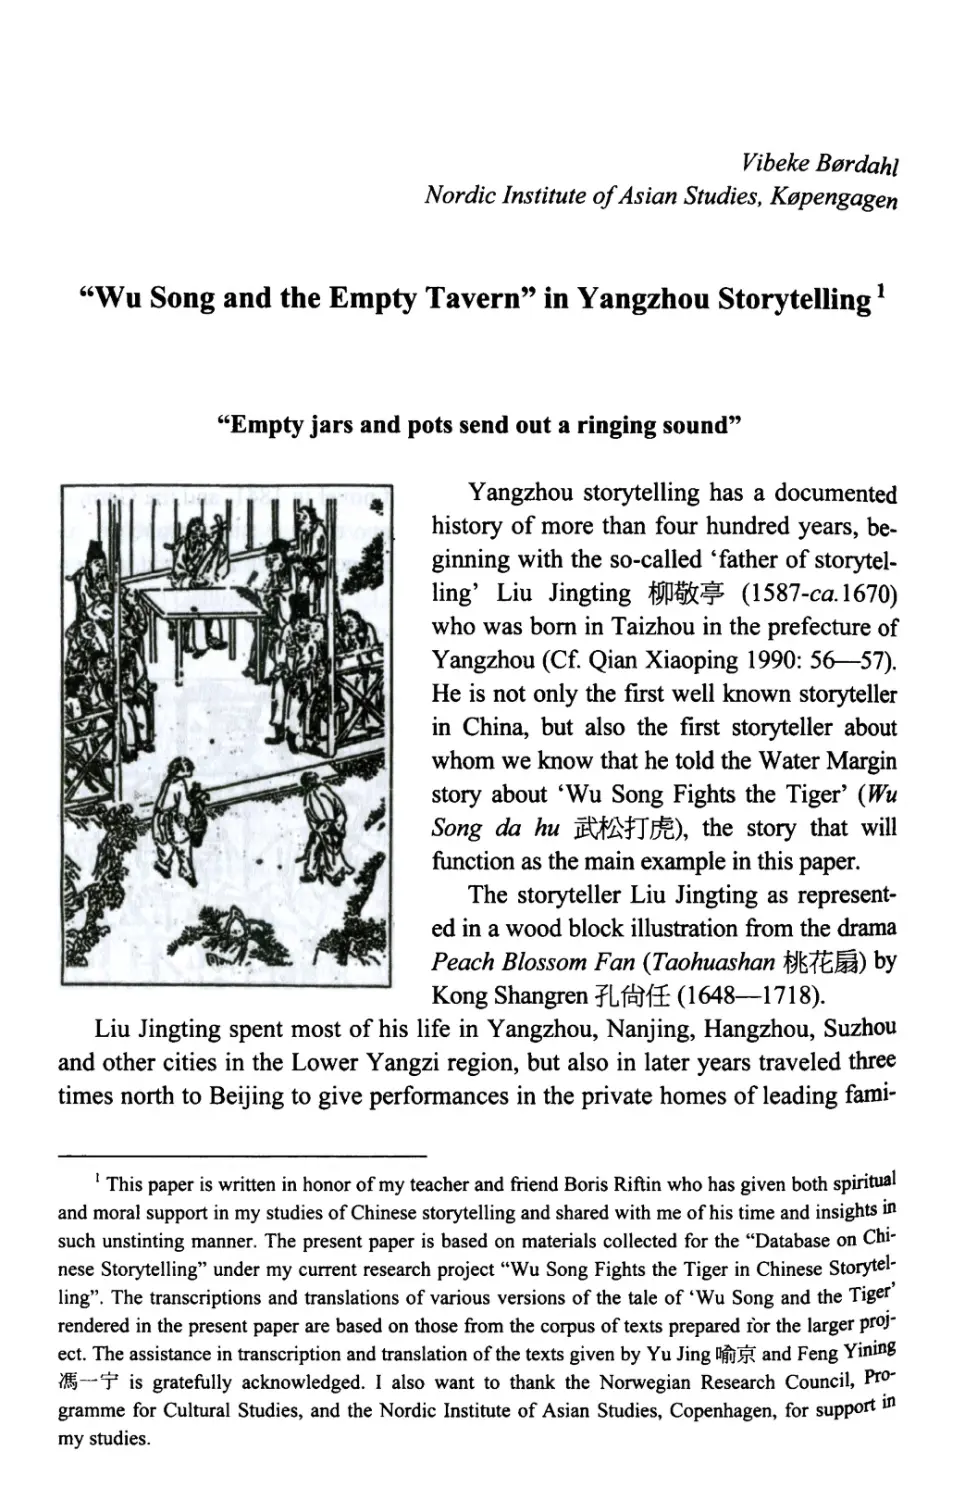 Vibeke Bordahl. 'Wu Song and the Empty Tavern' in Yangzhou Storytelling